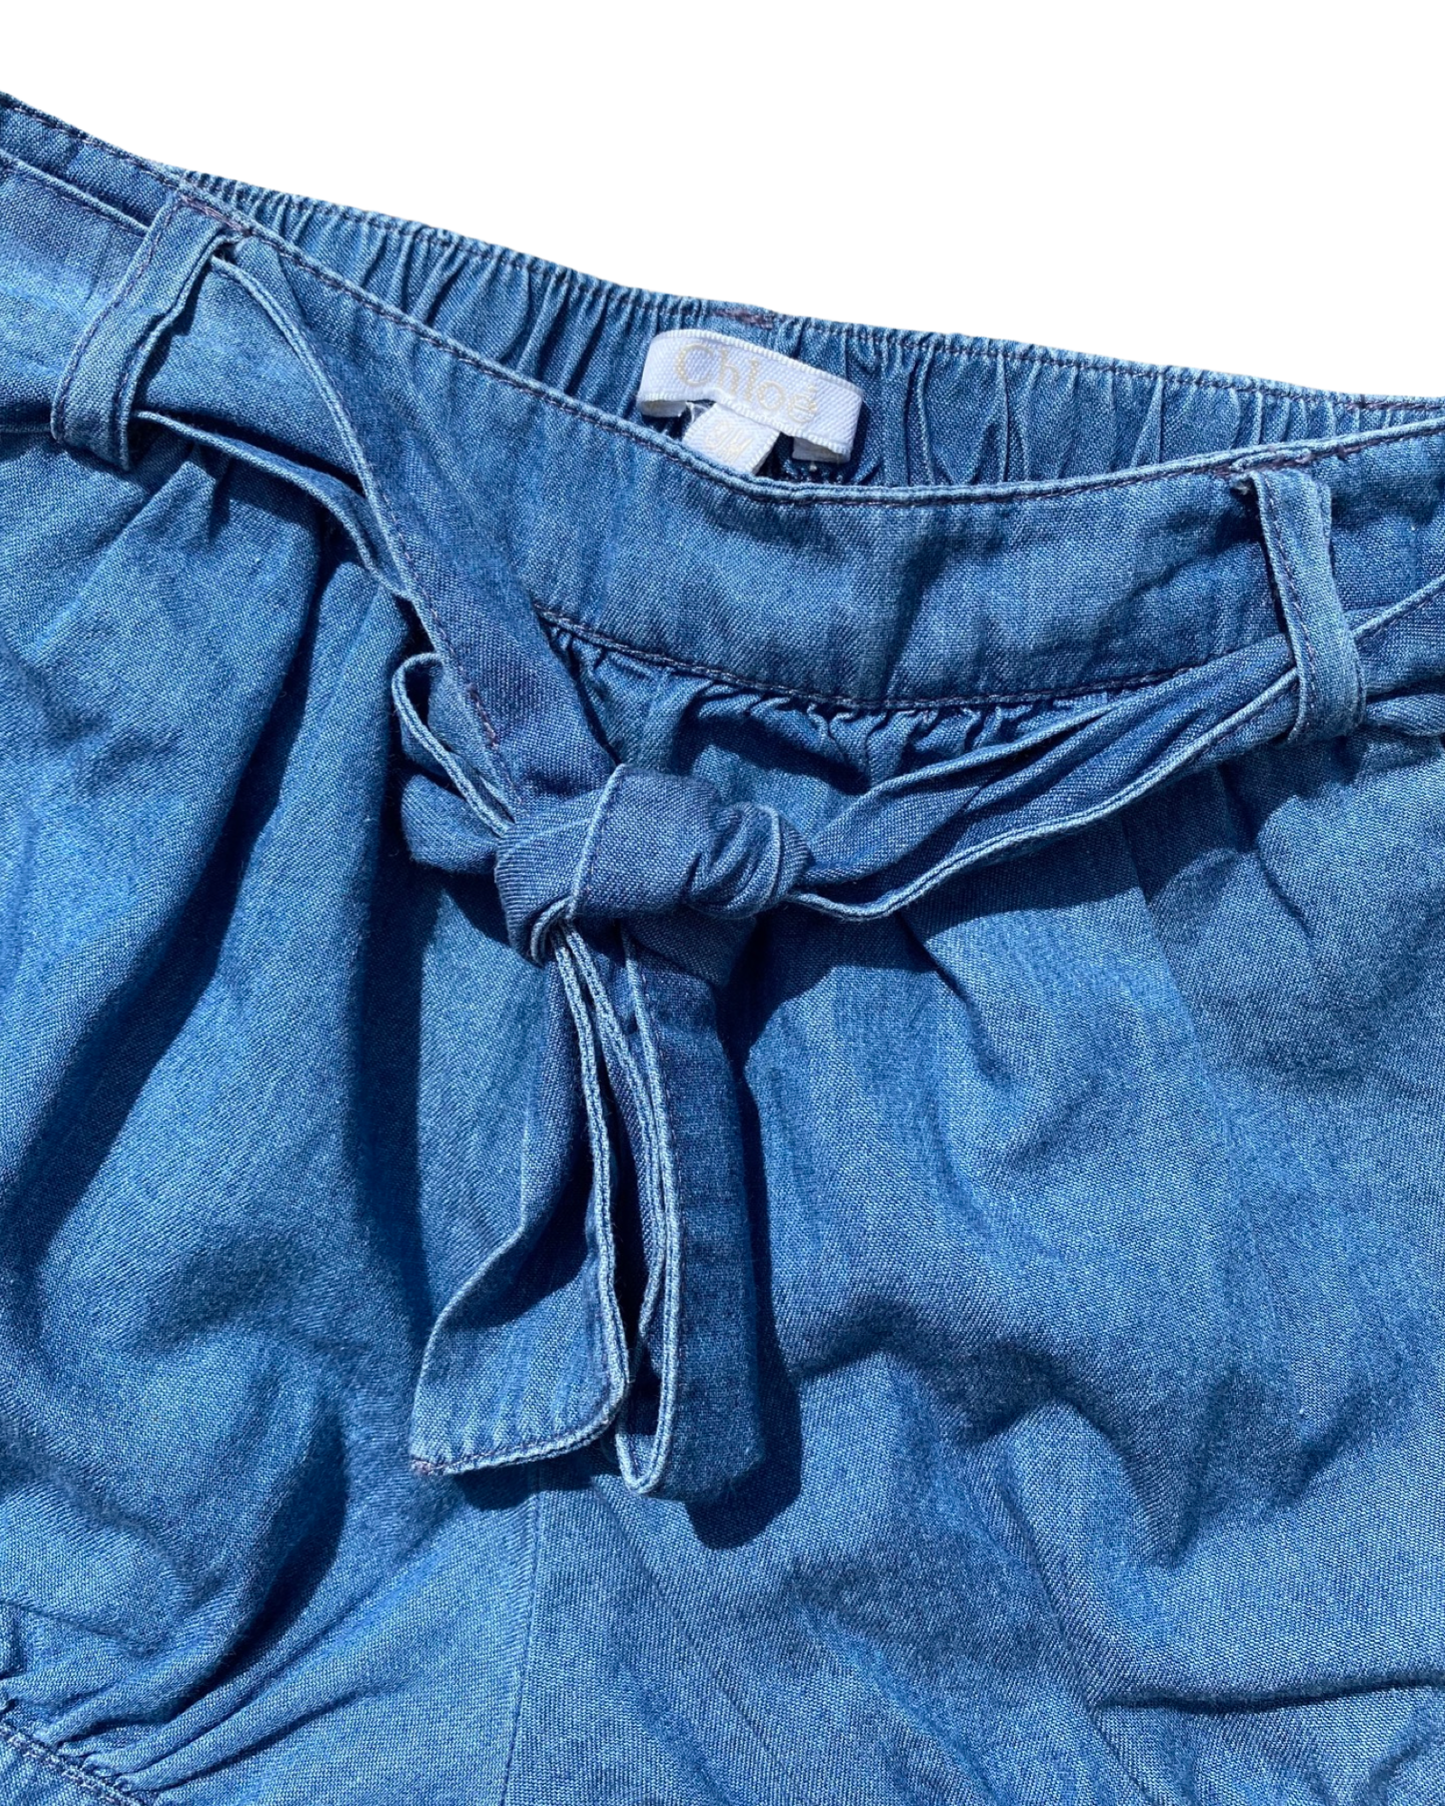 Chloé denim bloomer shorts (6-9mths)